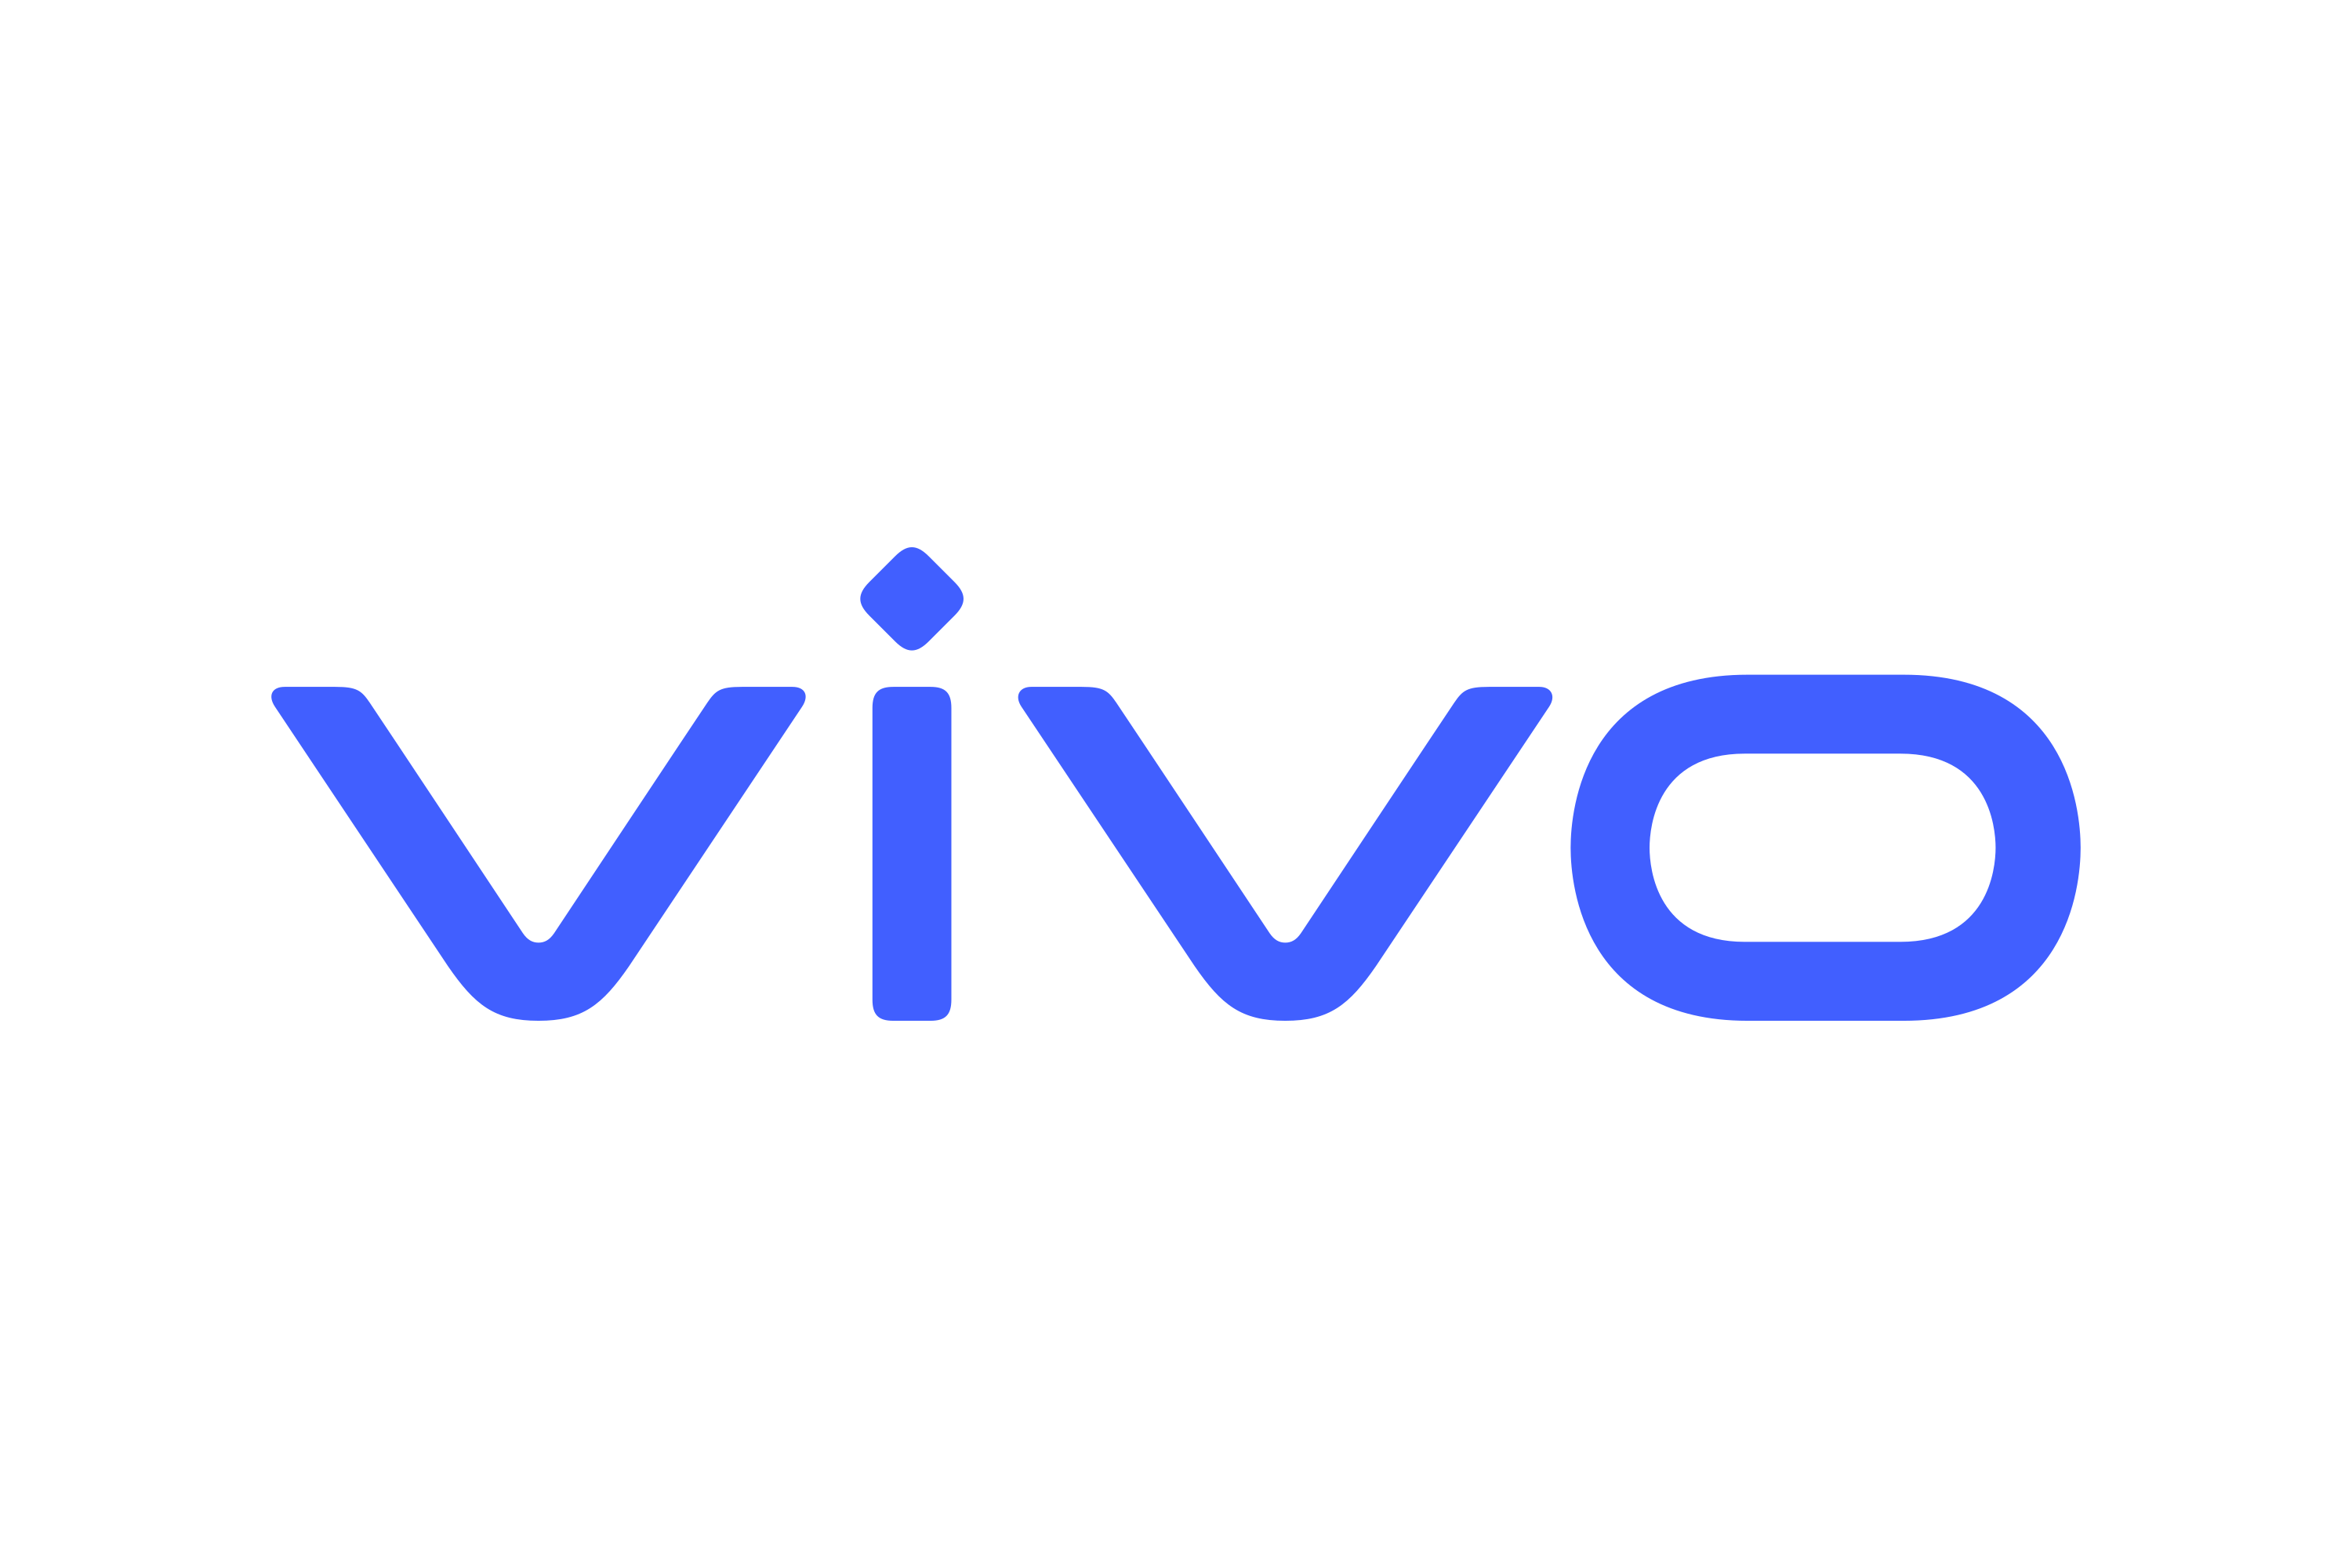 Download Vivo Electronics Logo in SVG Vector or PNG File Format - Logo.wine